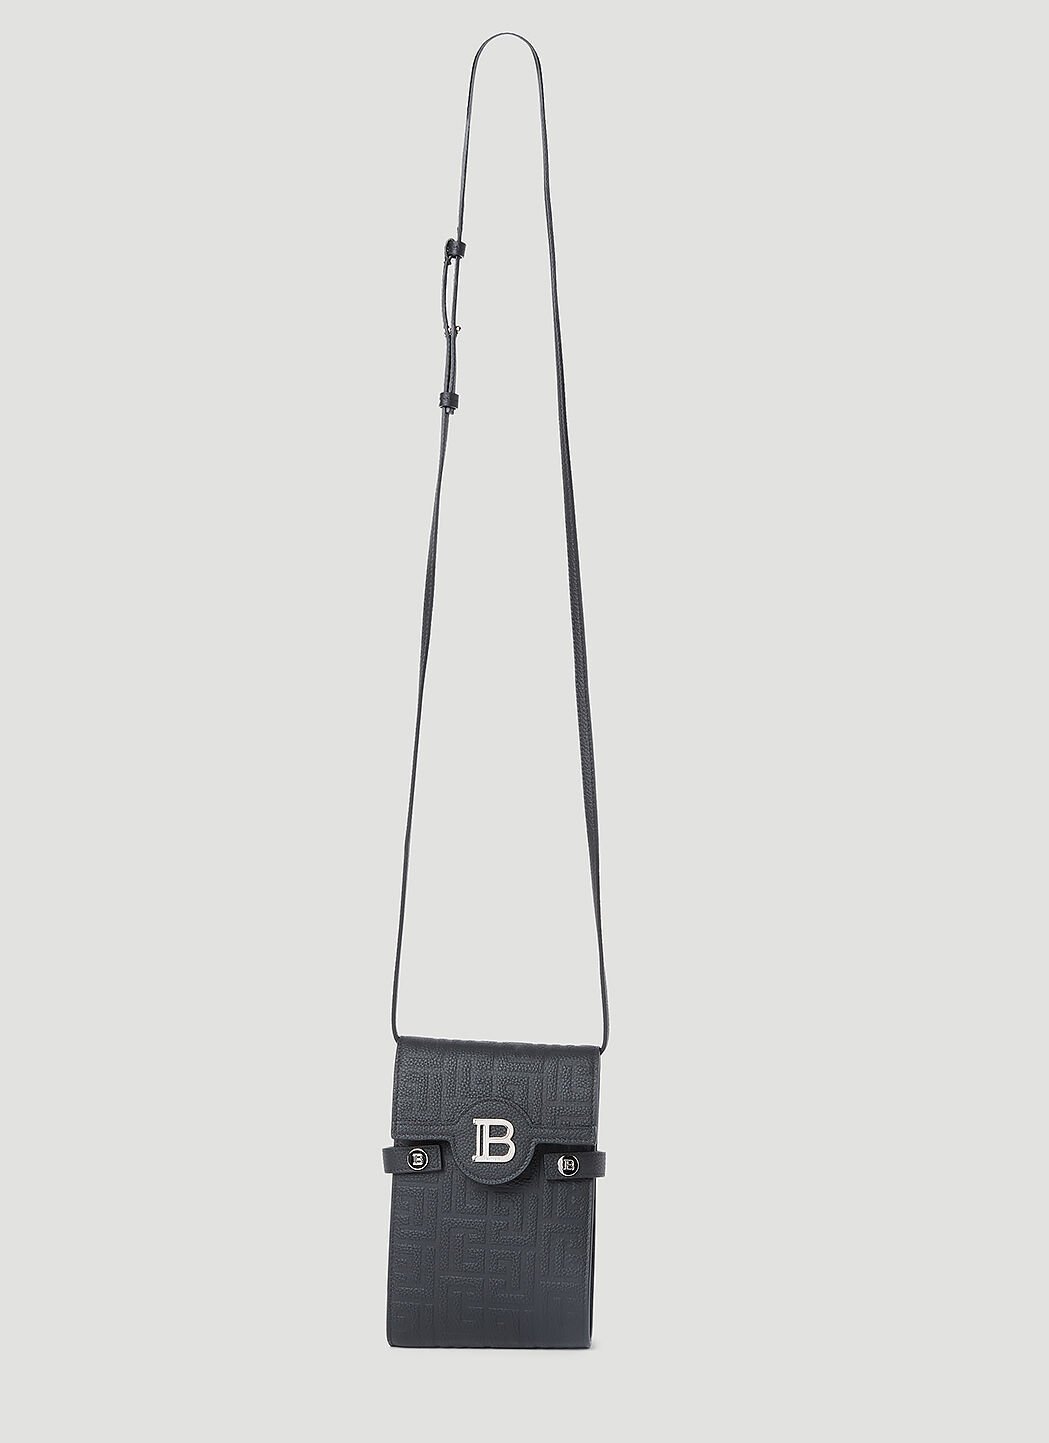 Balenciaga B-Buzz 皮革手机袋 黑色 bcs0153001